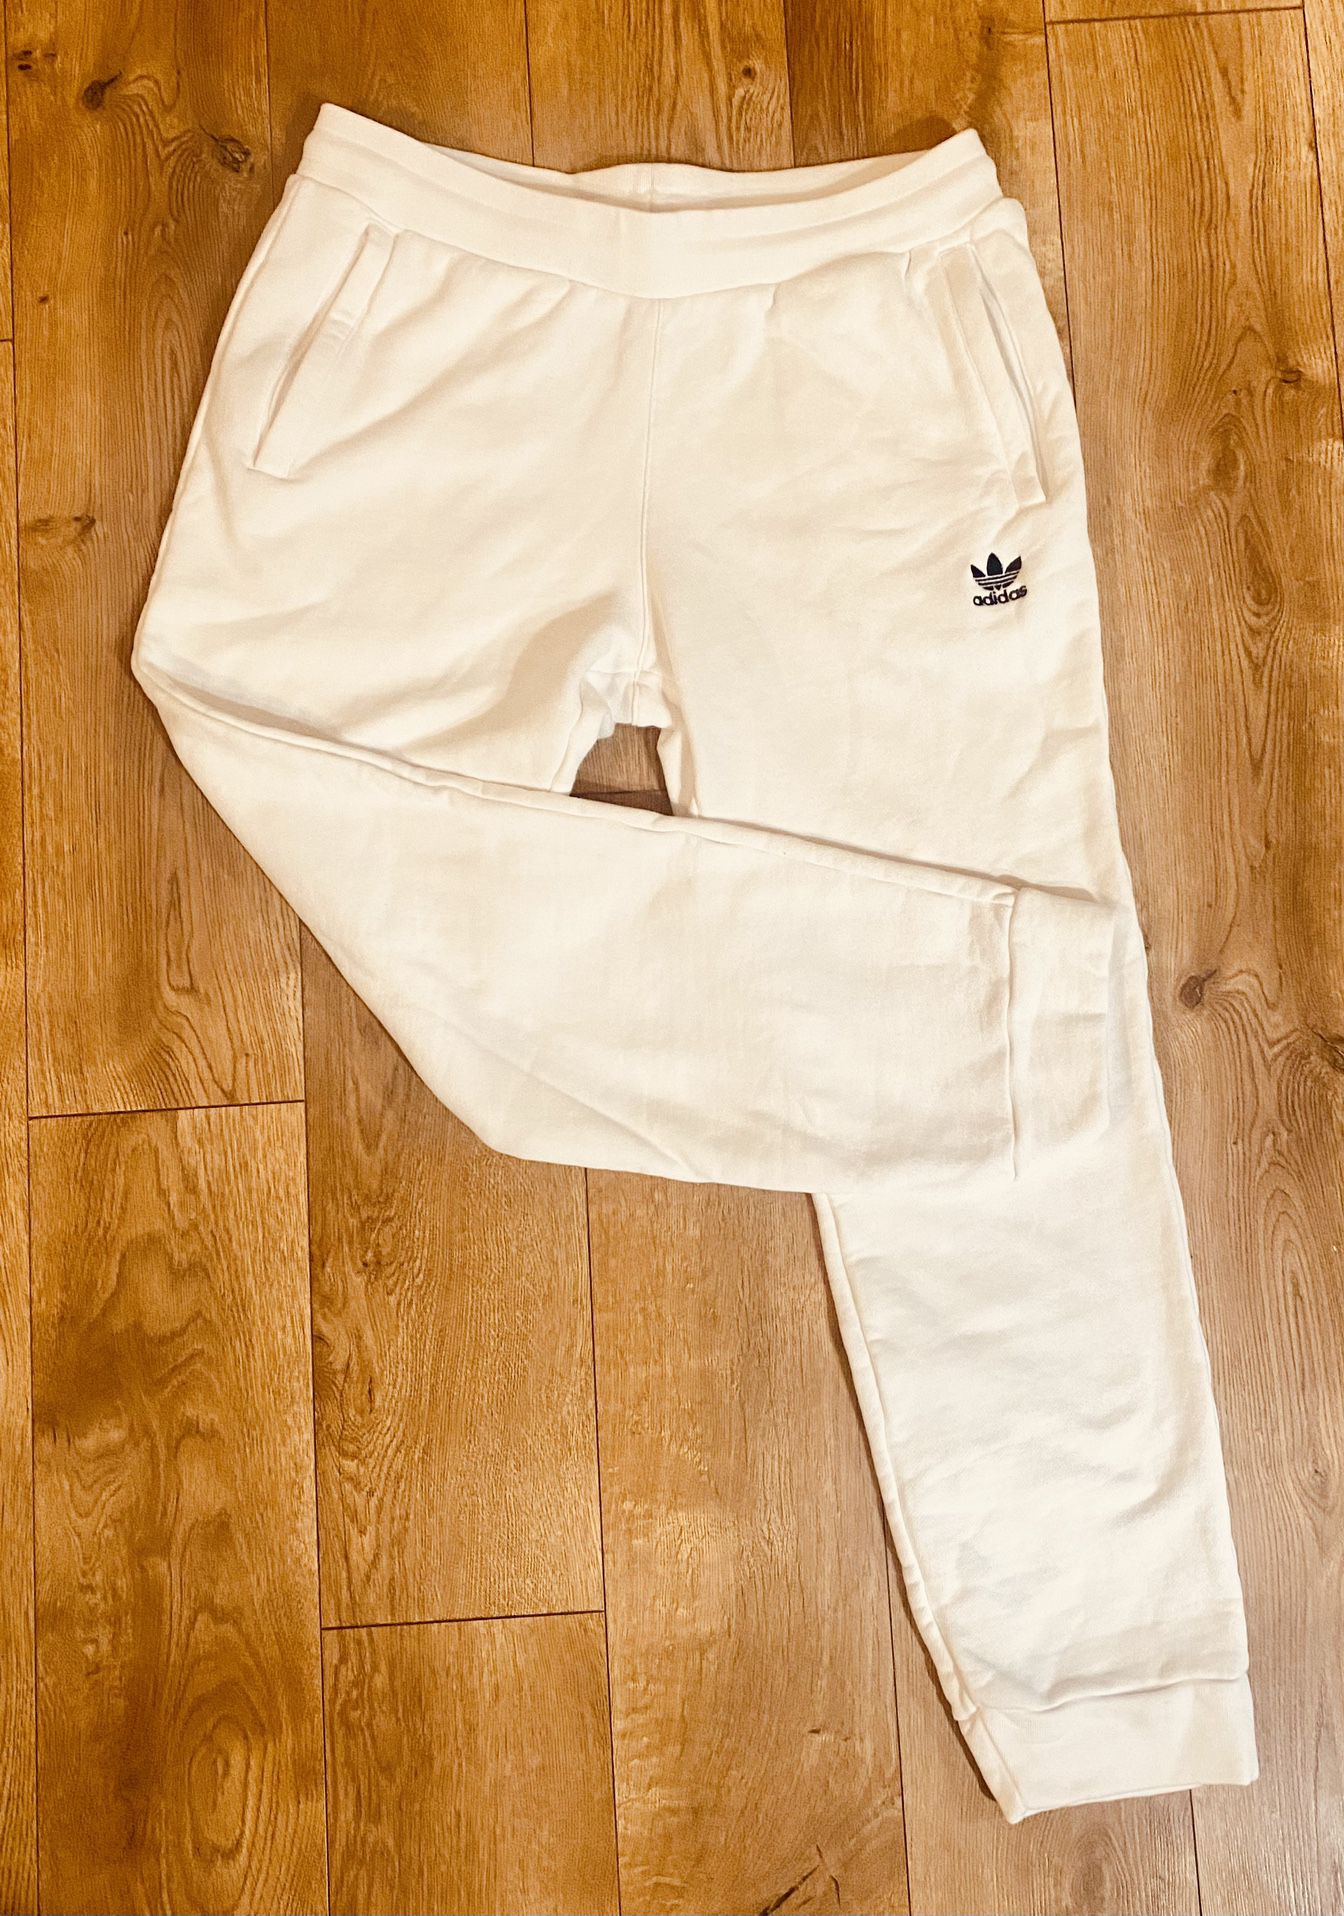 Adidas Unisex Originals X Pharrell Williams Basics White Pull On Sweatpants Sz L